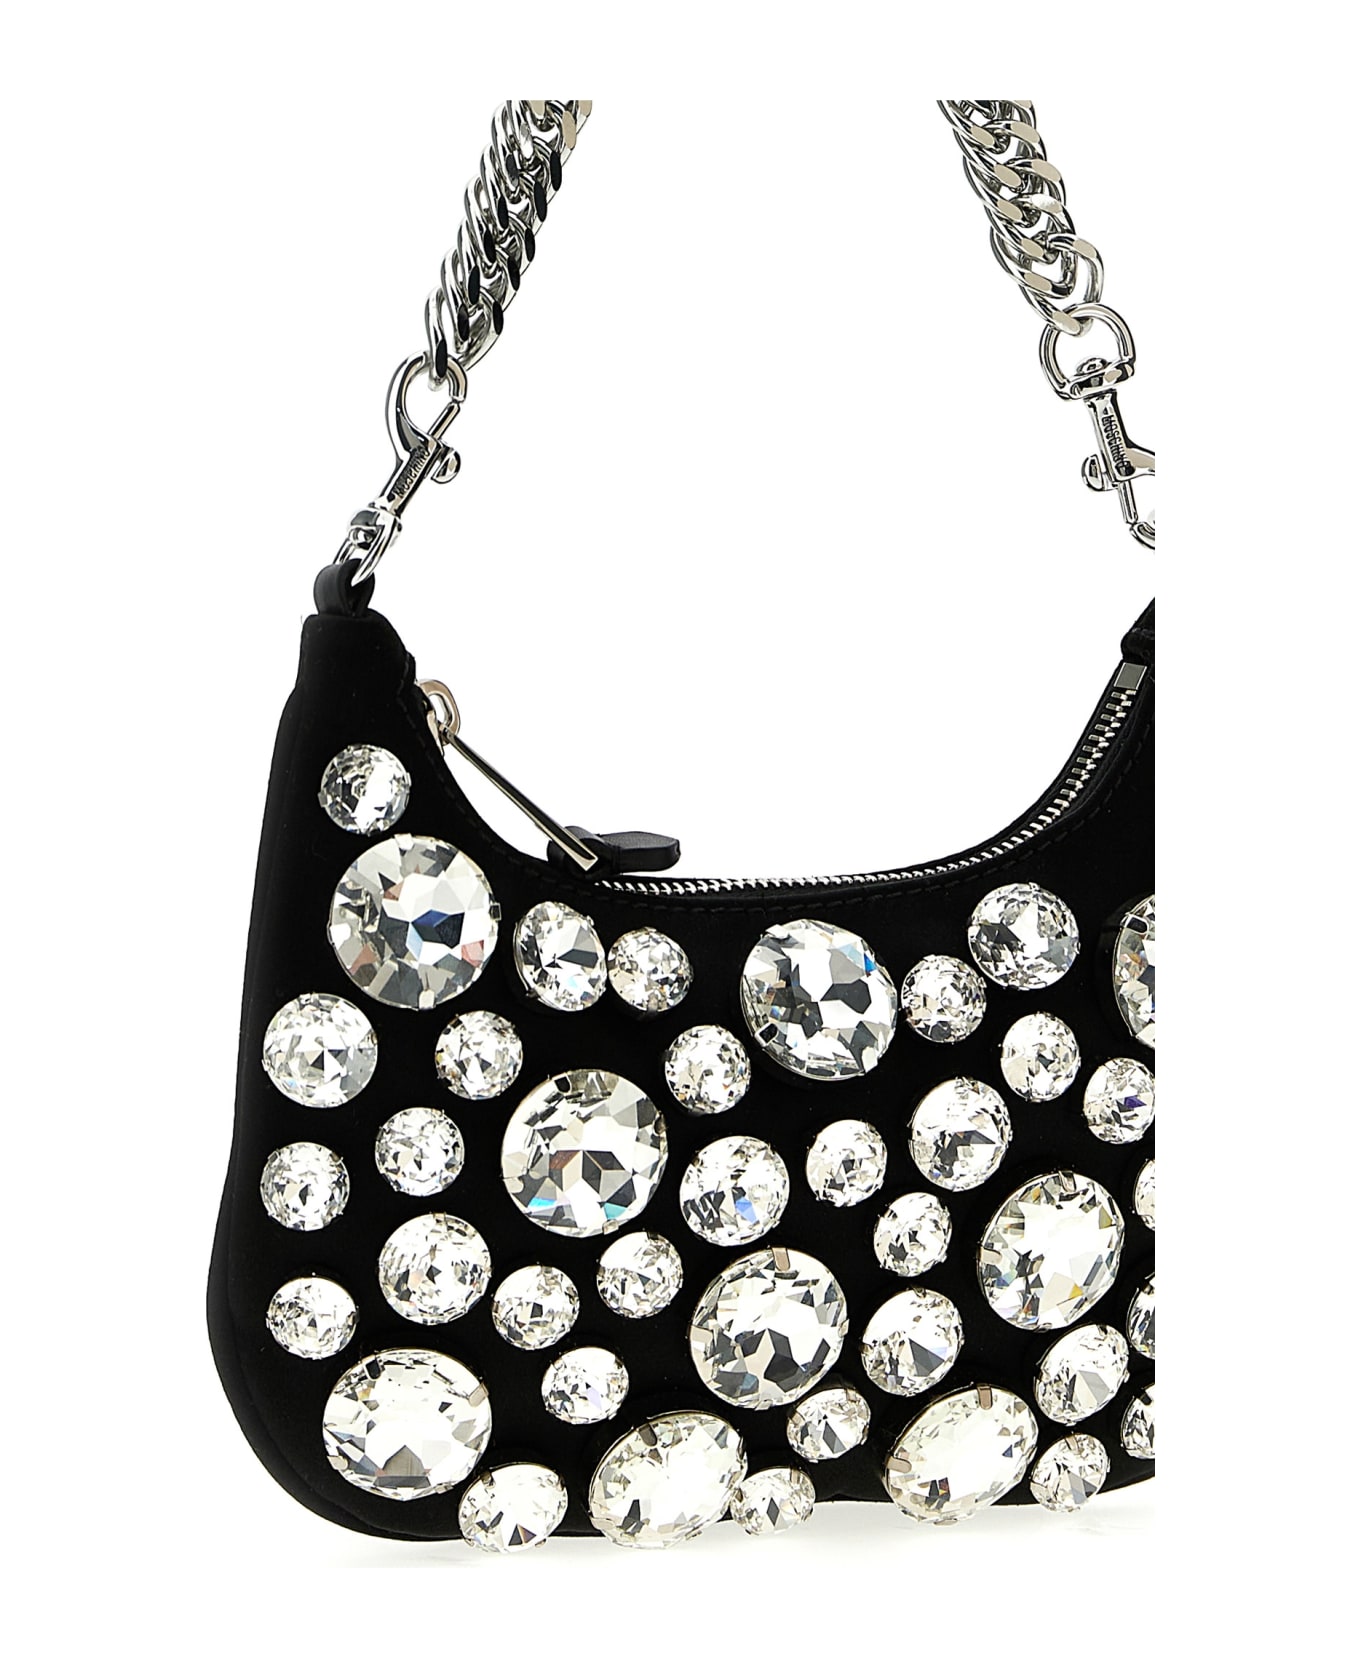 Moschino Jewel Stones Handbag - Black  